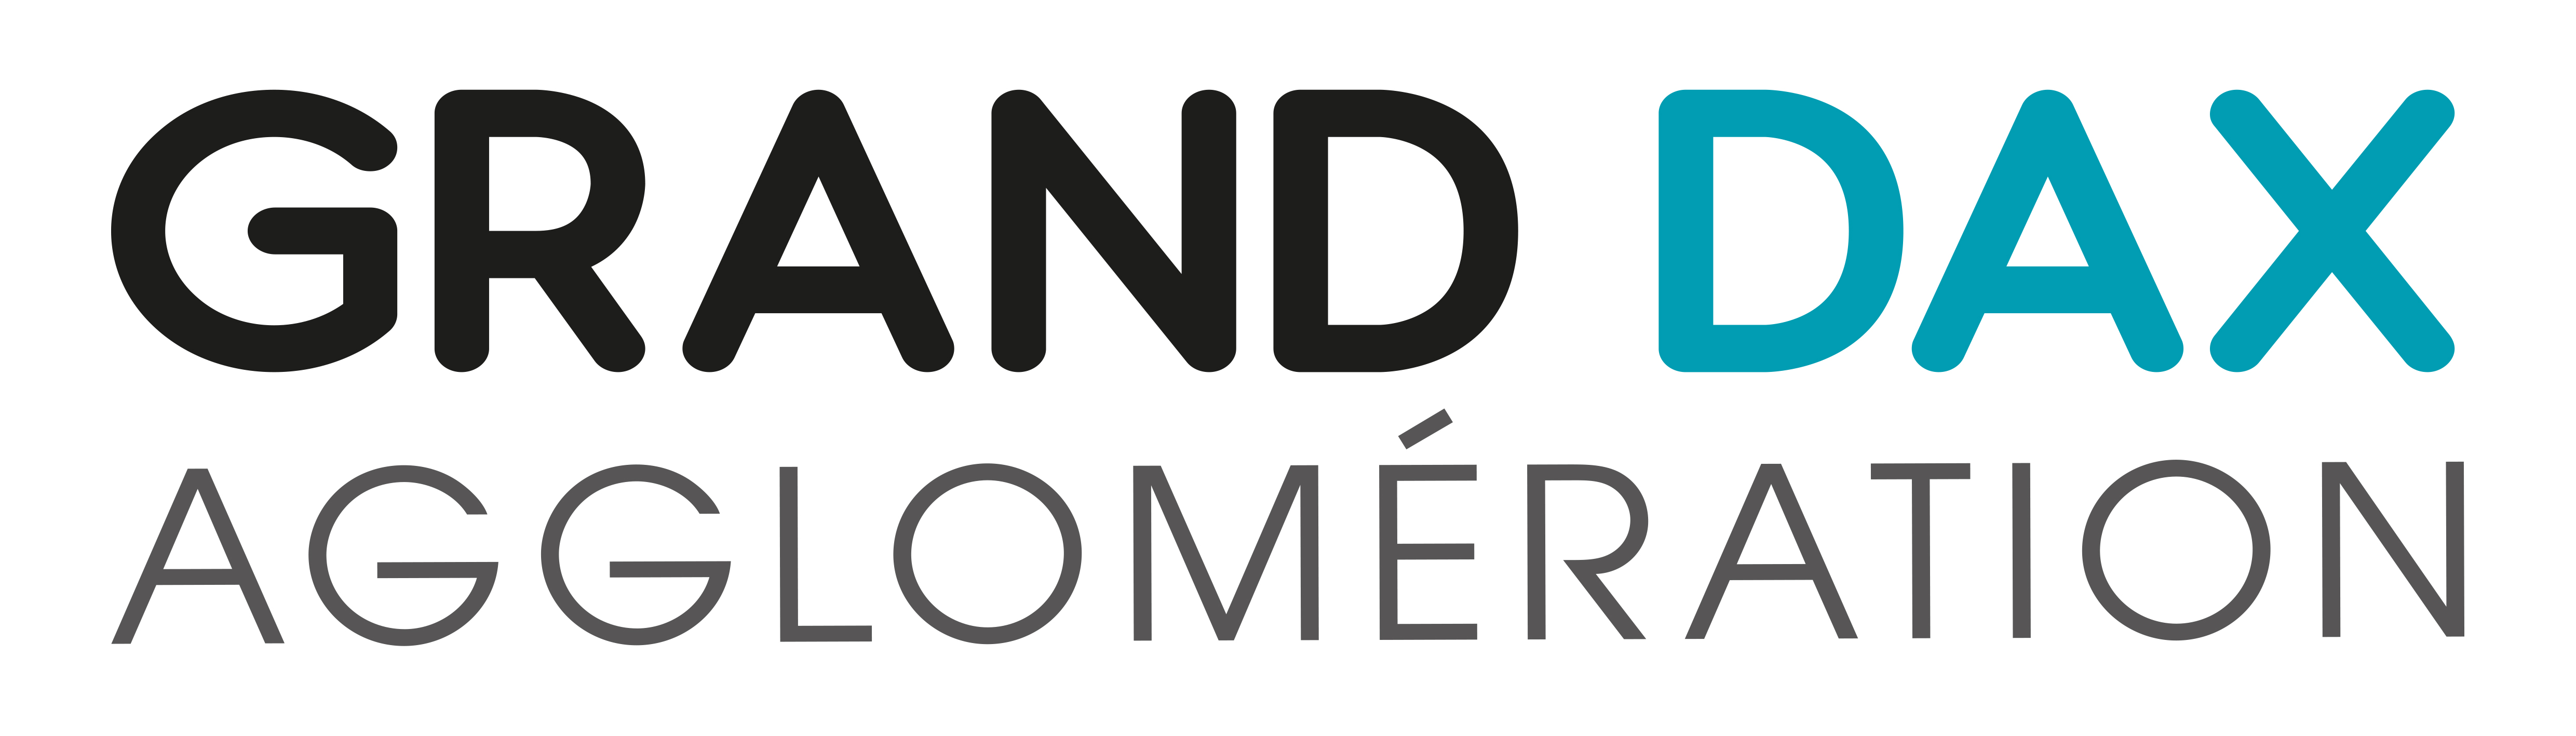 Grand Dax logo.jpg